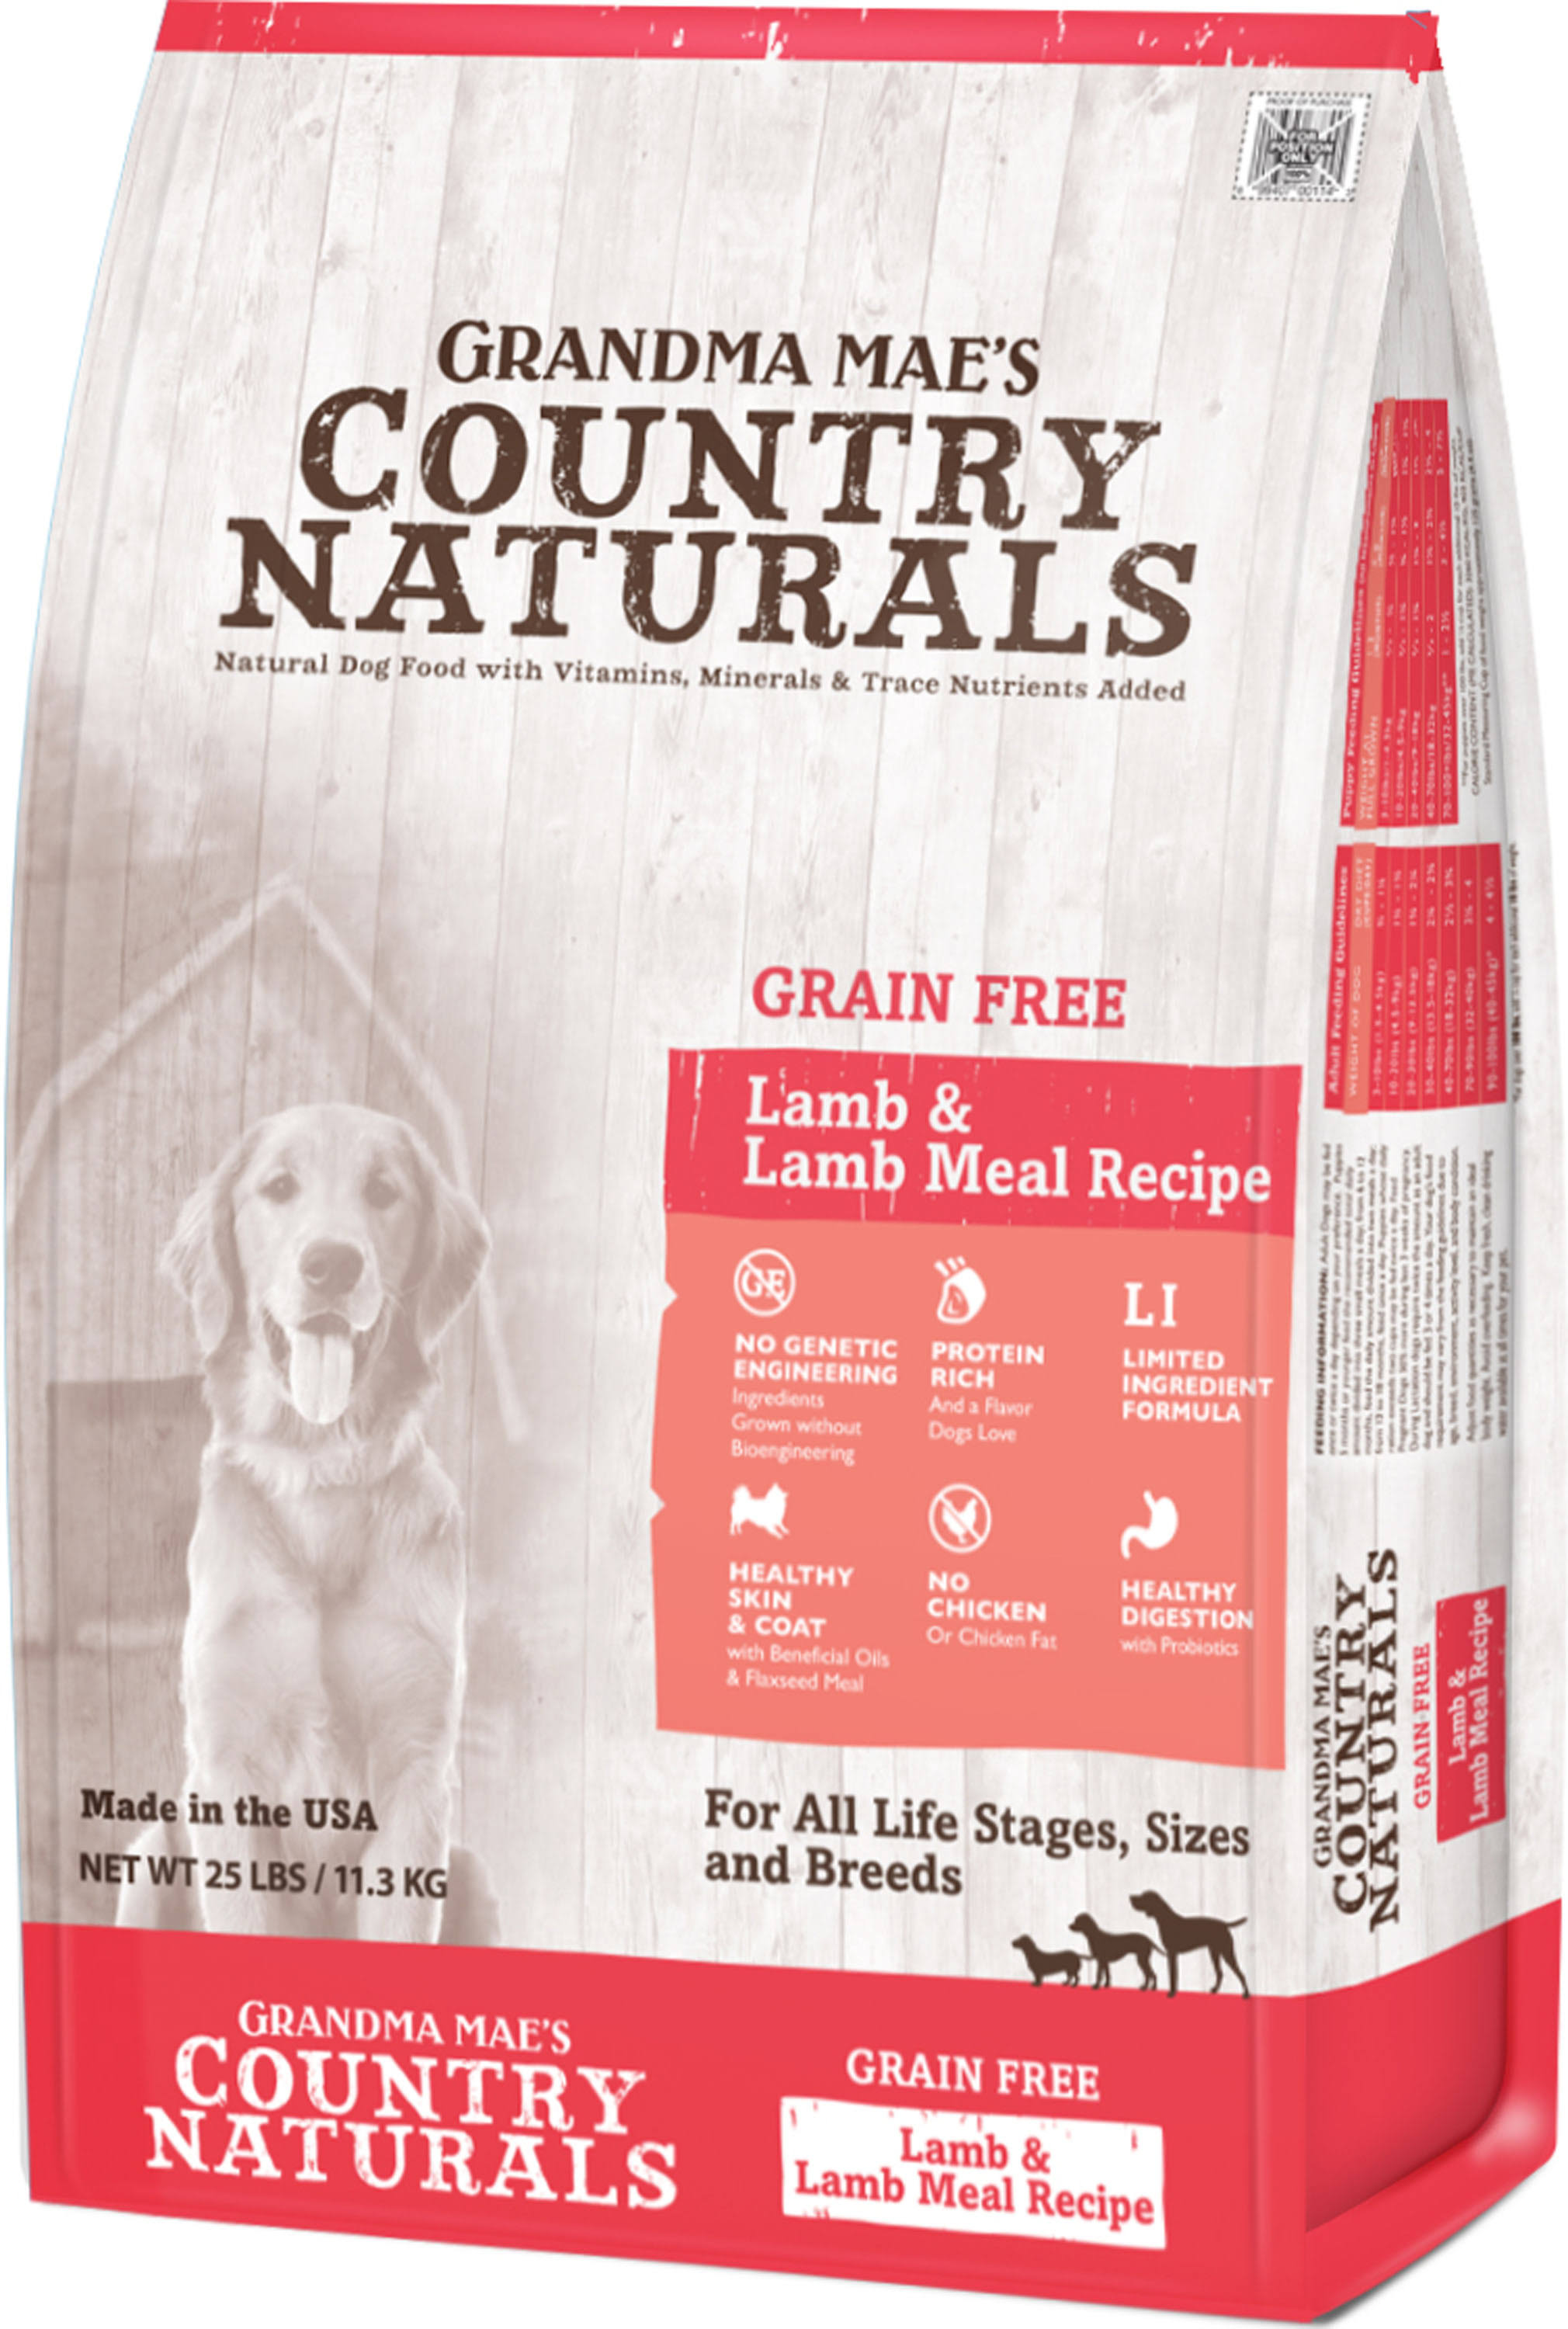 Grandma Mae's Country Naturals Grain Free Dog Food - 6.5lbs